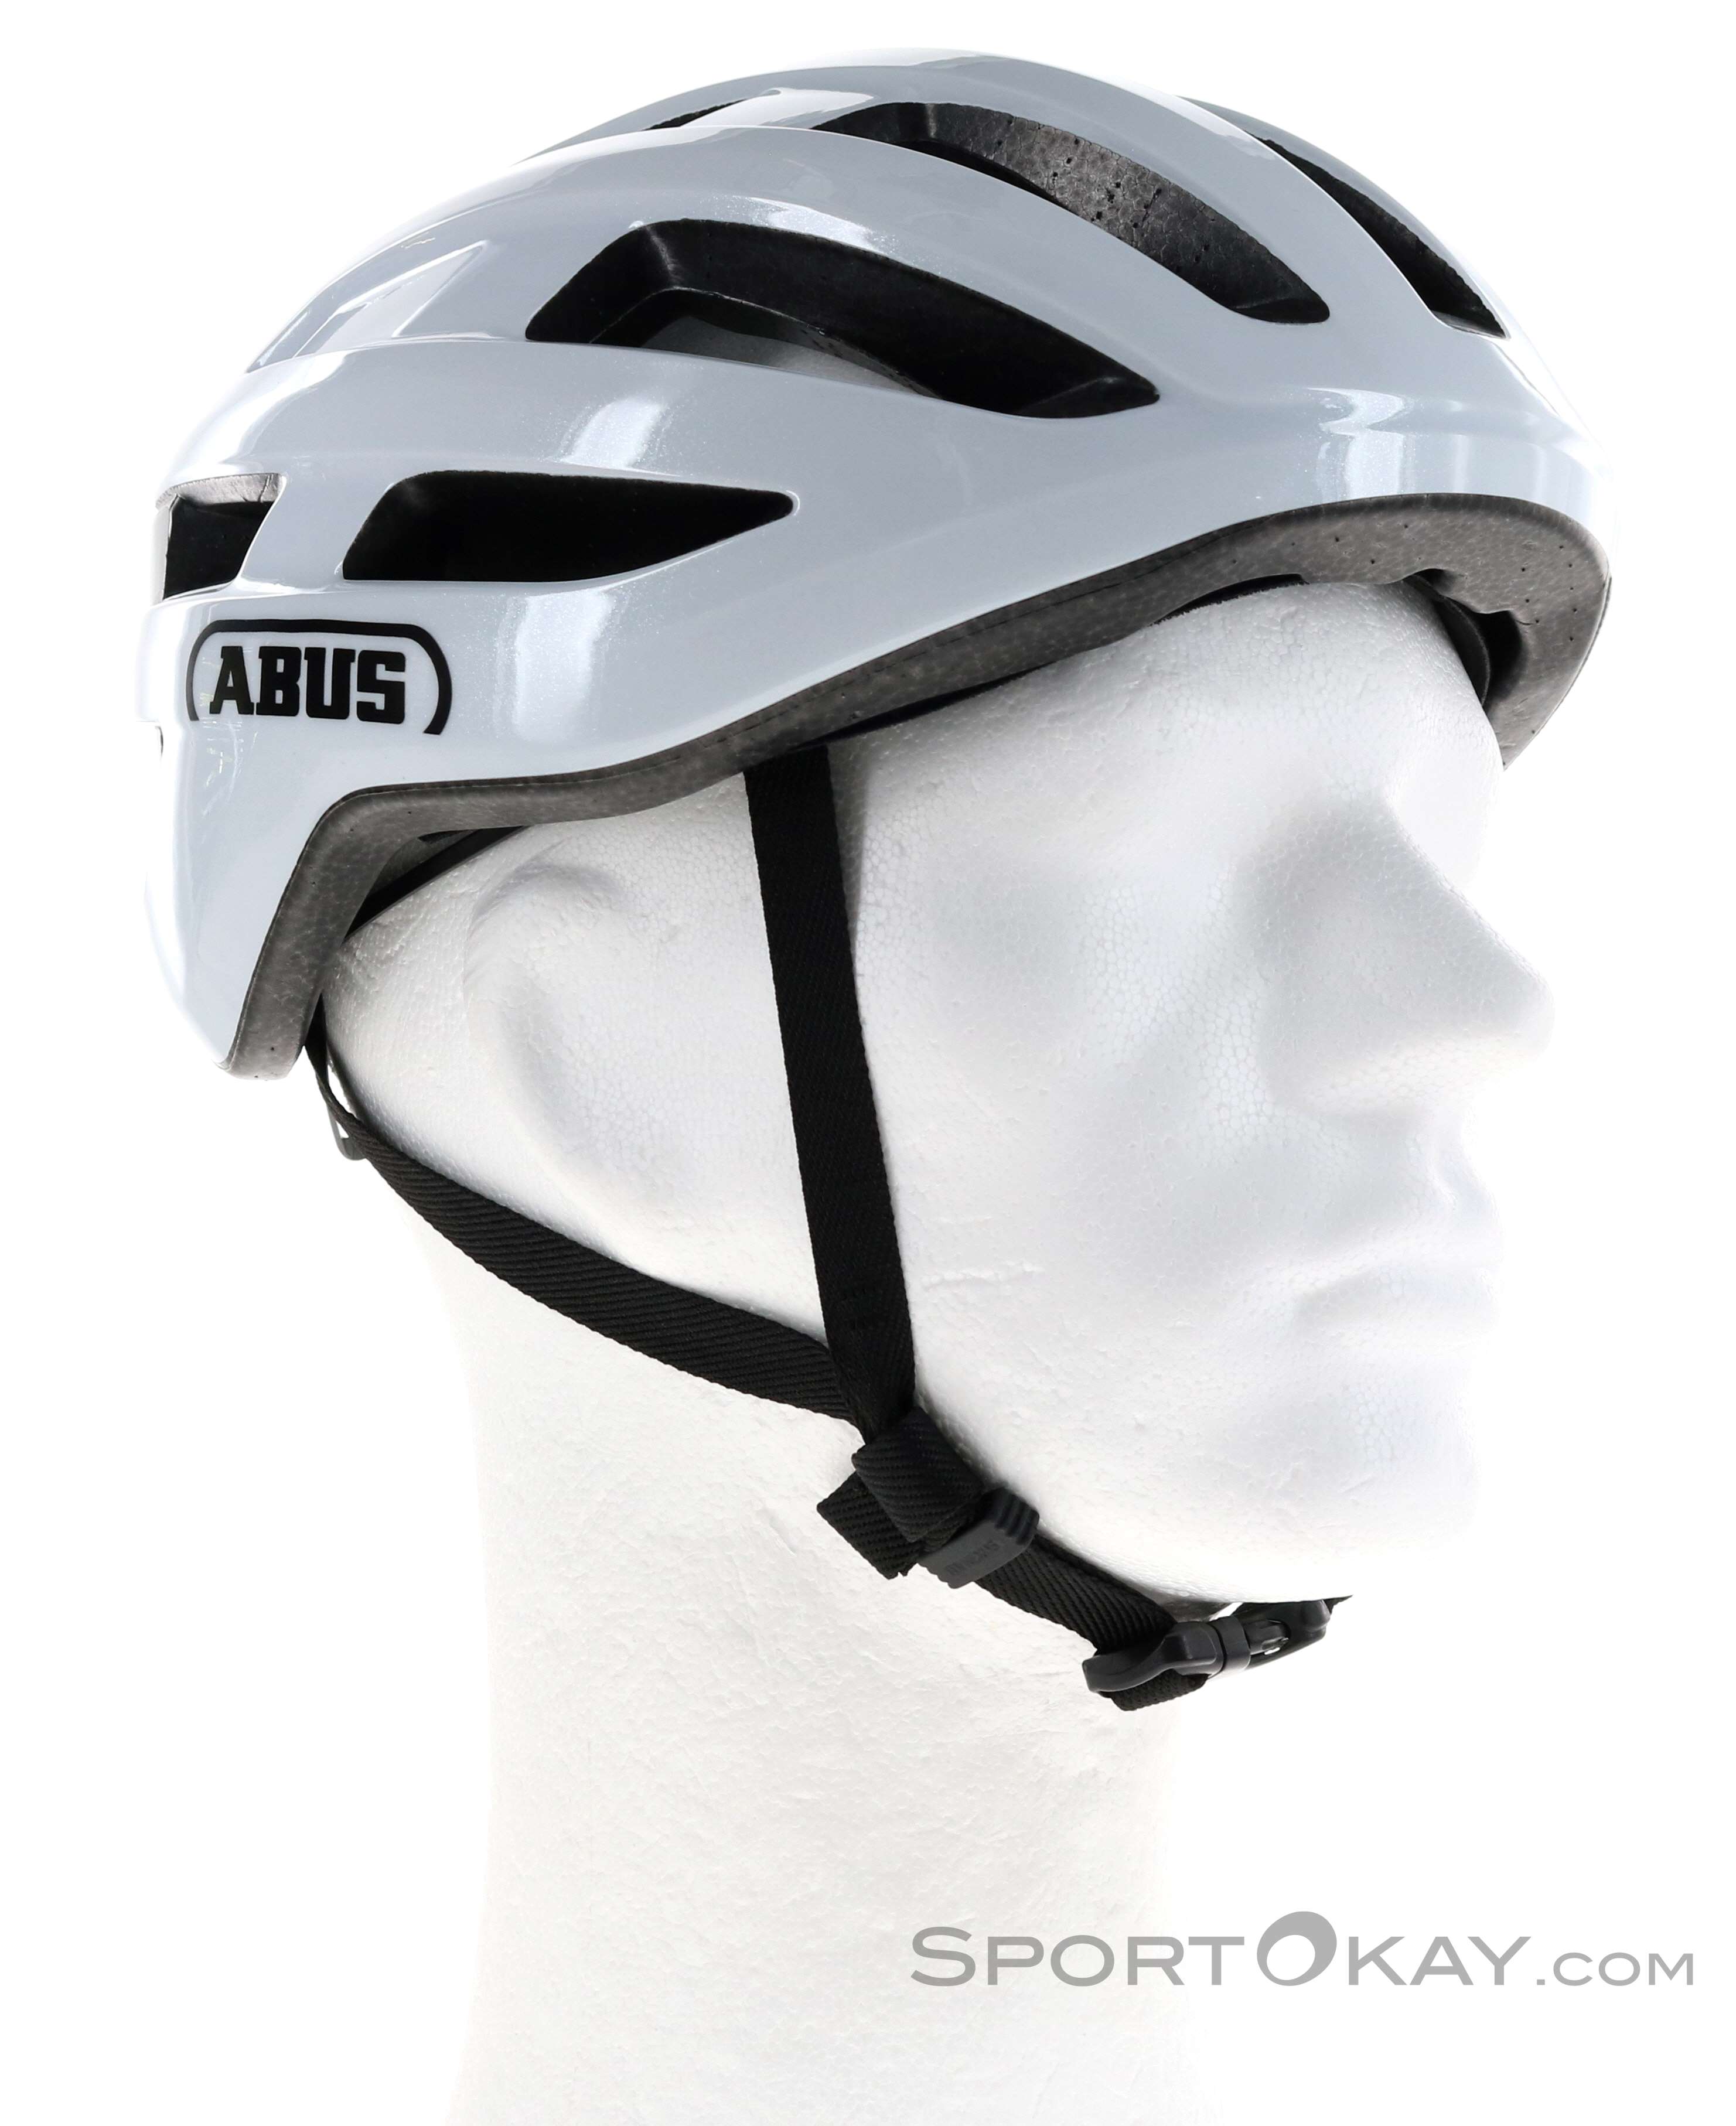 Abus AirBreaker Road Cycling Helmet, Silver/White